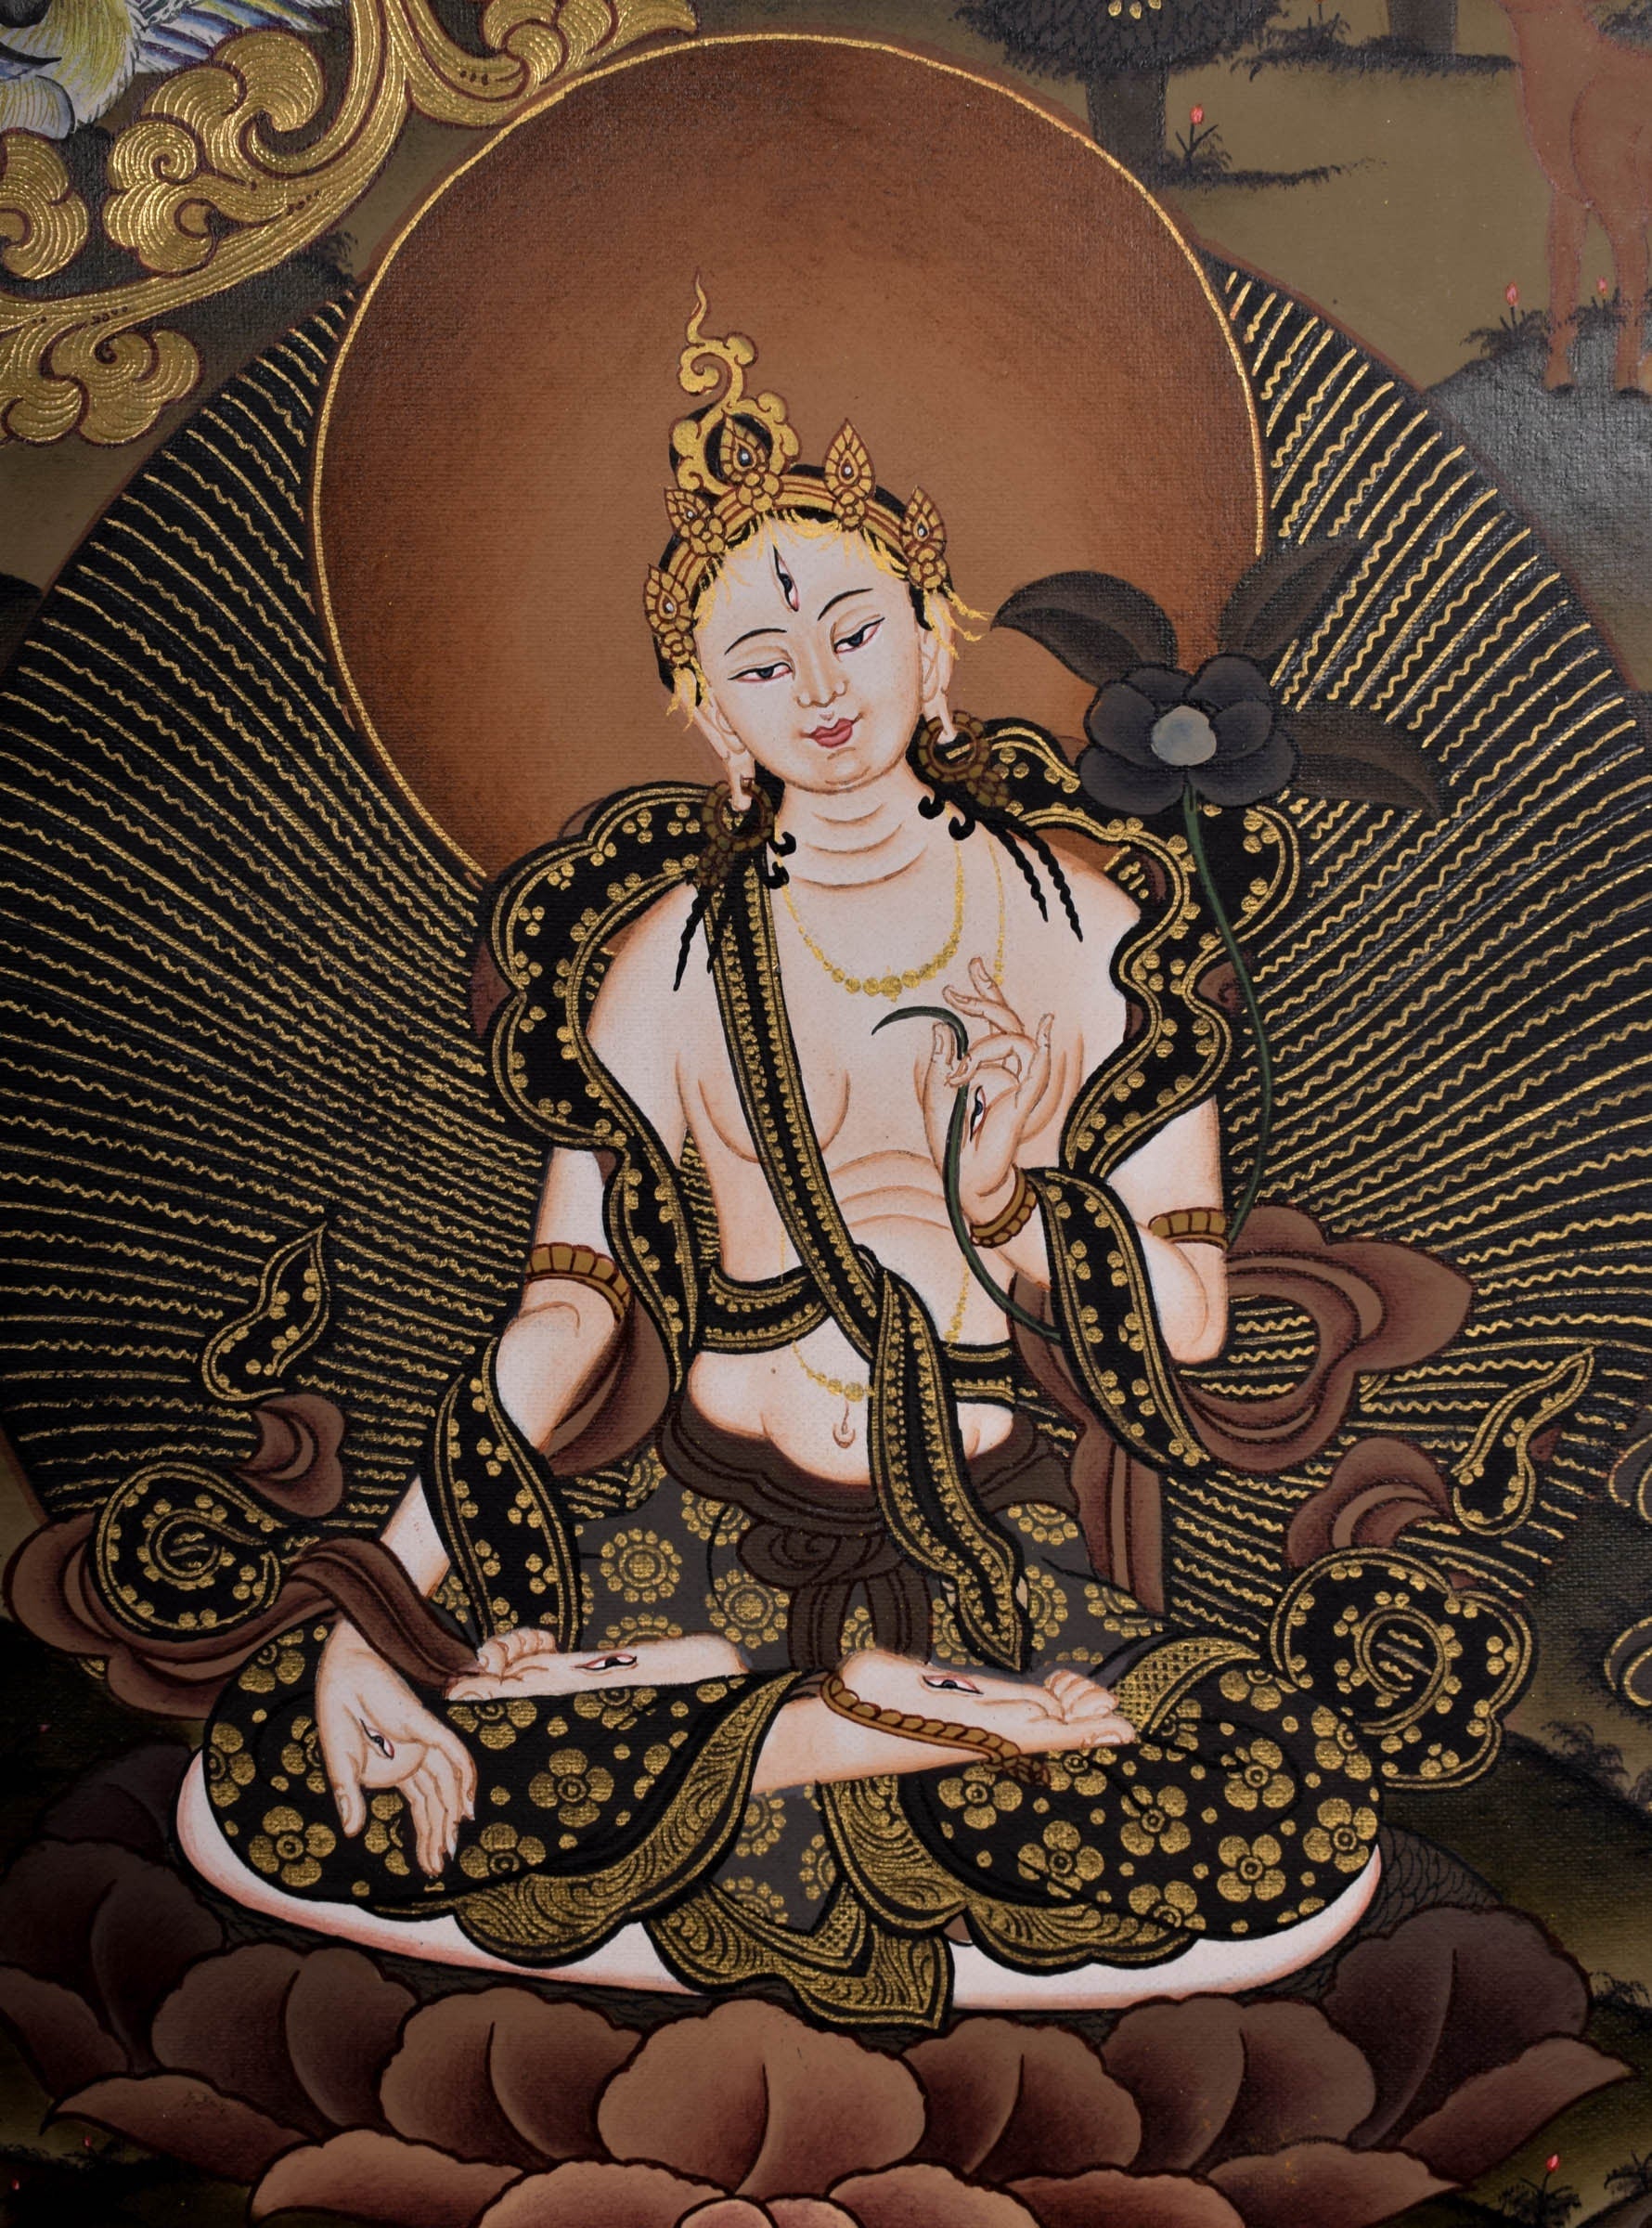 Amitayus Buddha Thangka painting - Lucky Thanka